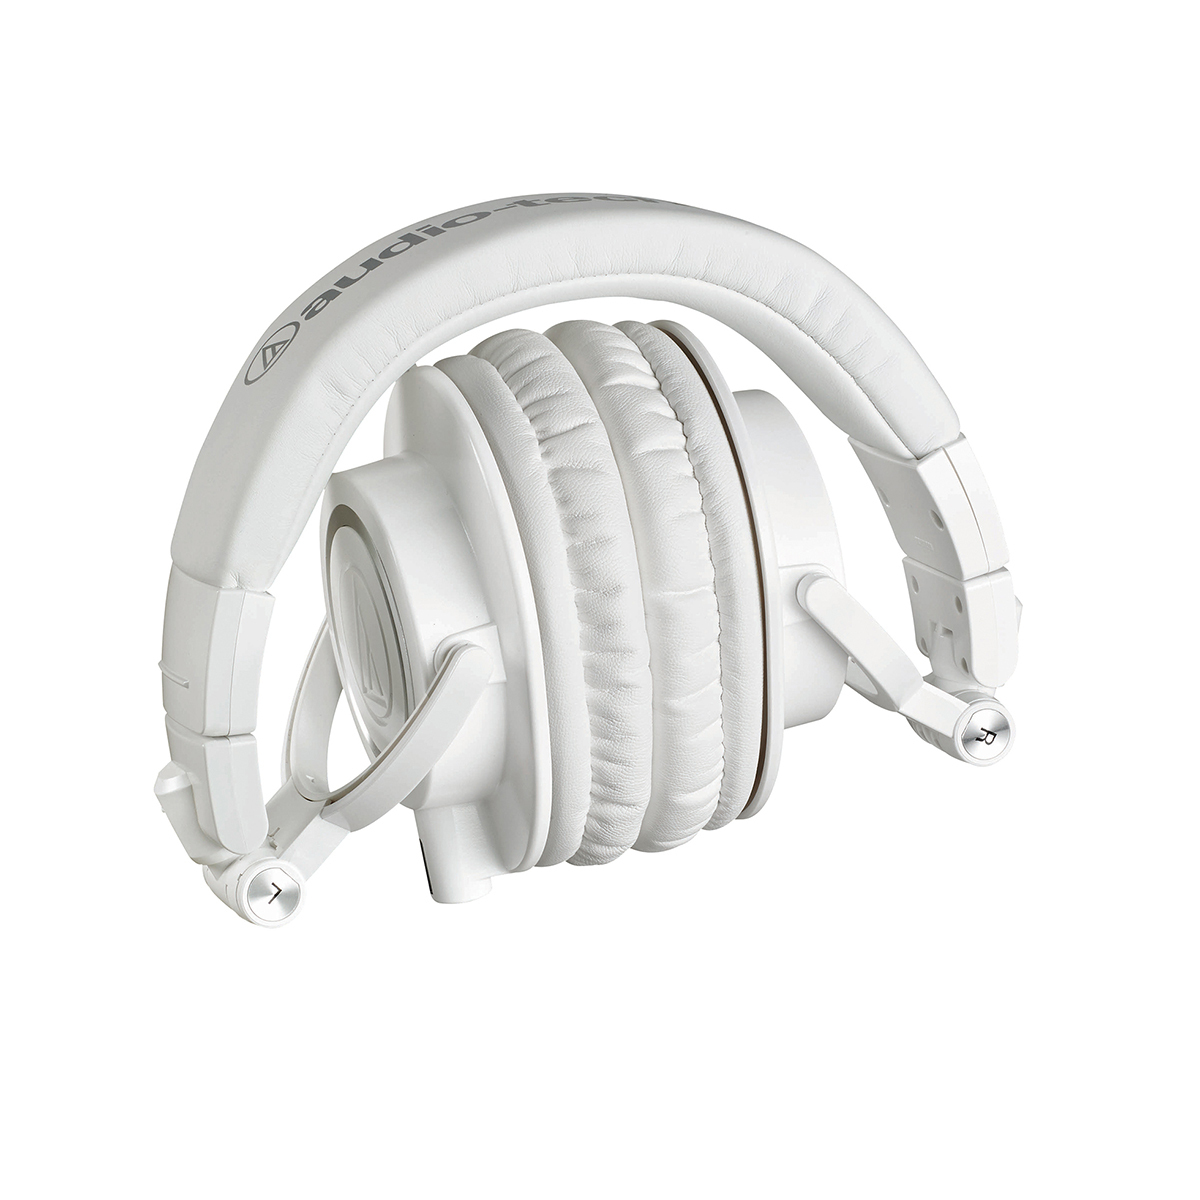 Картинка Наушники Audio-Technica ATH-M50X White - лучшая цена, доставка по России. Фото N3